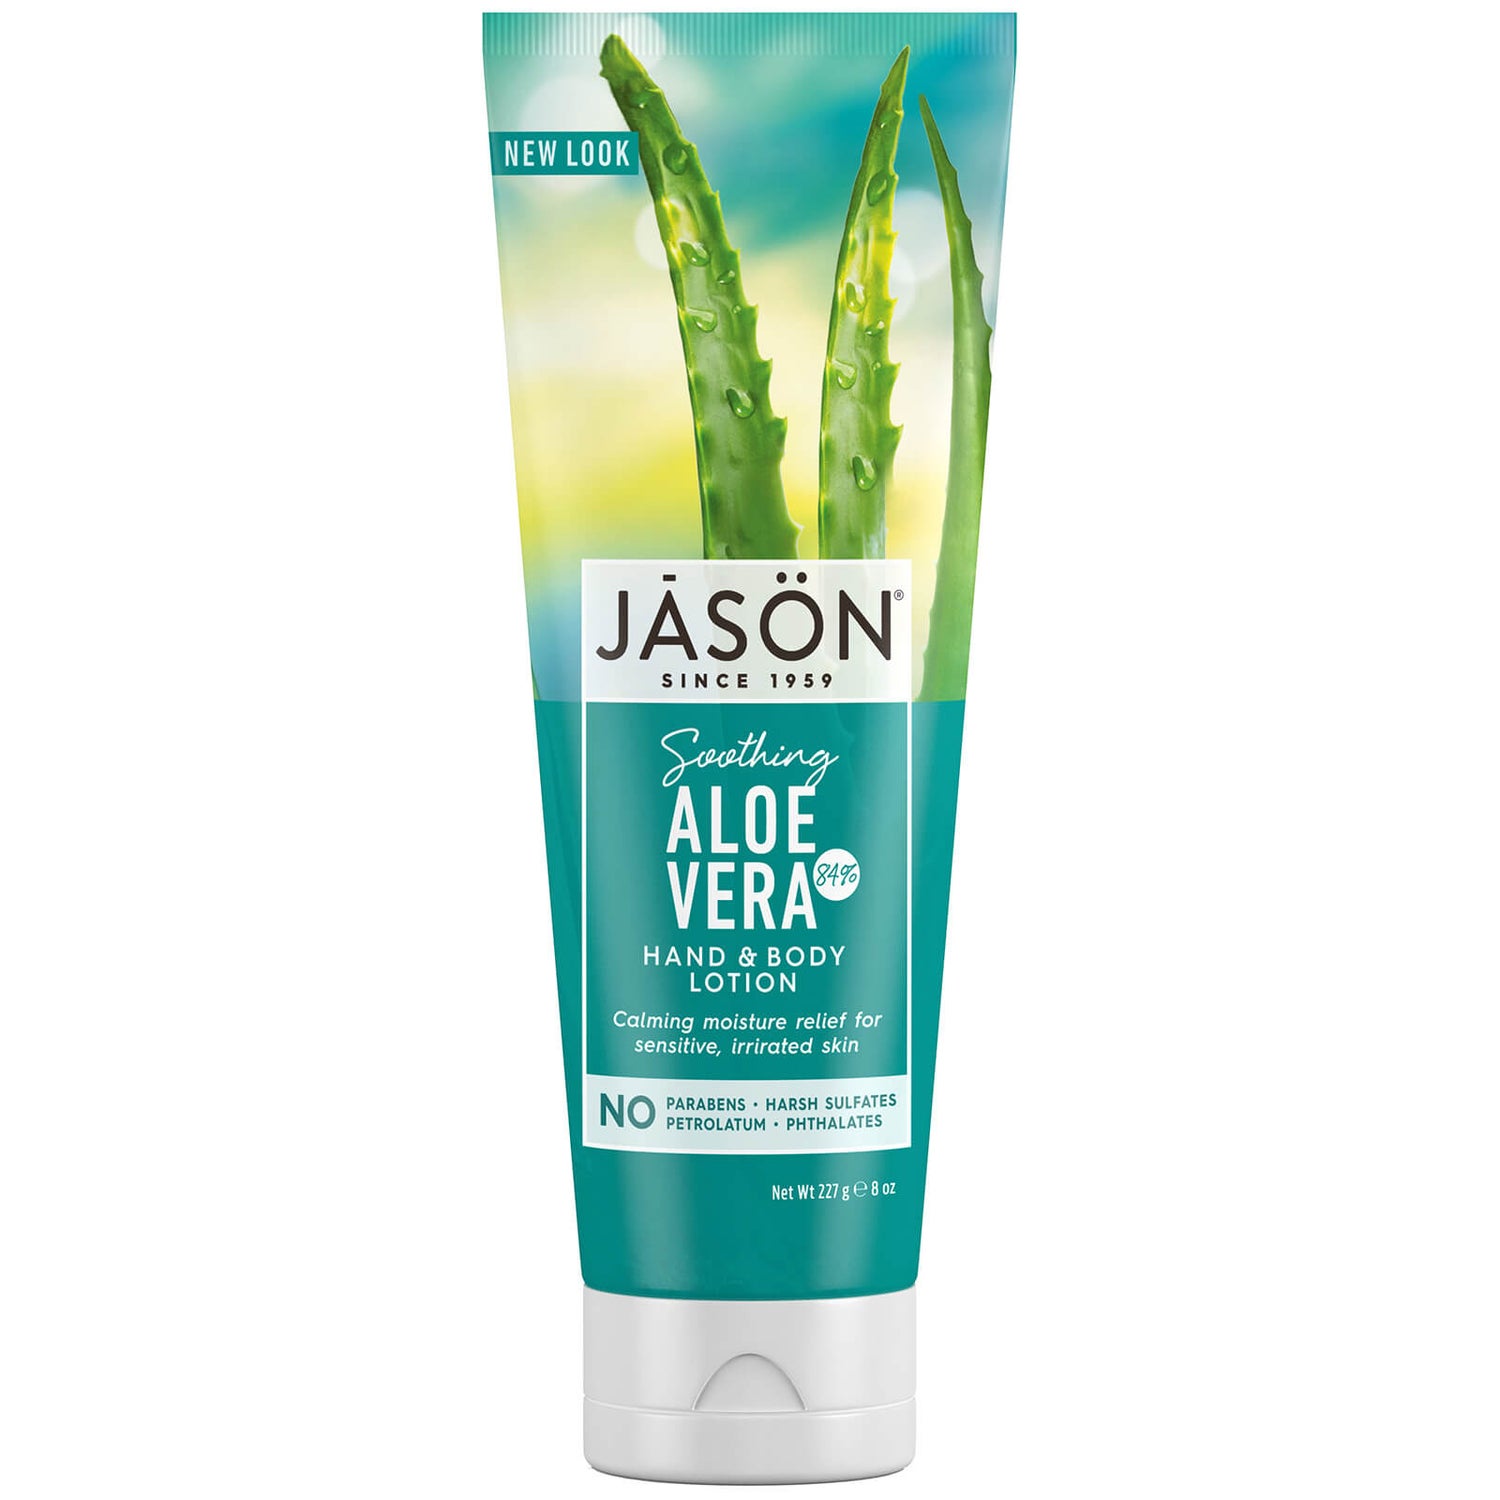 JASON Soothing 84% Aloe Vera Hand & Body Lotion(제이슨 수딩 84% 알로에 베라 핸드 & 바디 로션 227g)